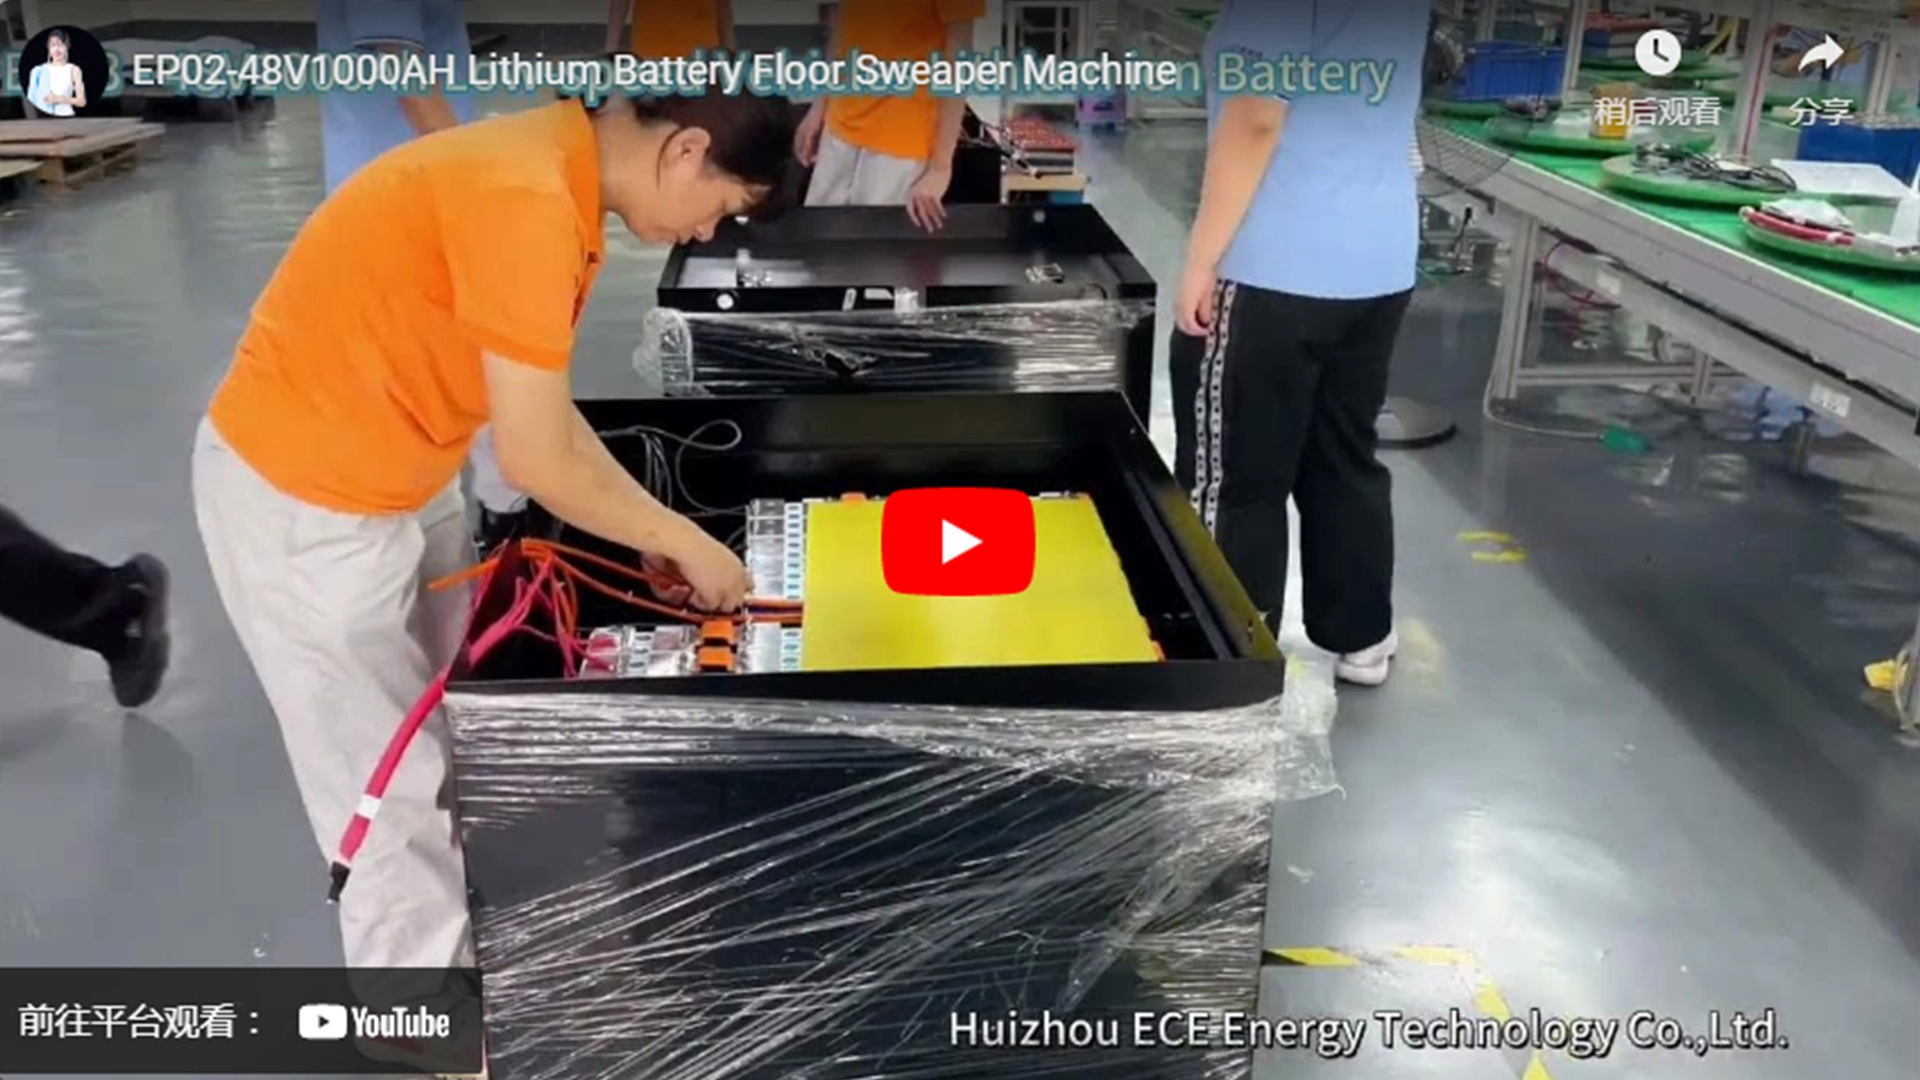 EP02-48V1000AH Lithium Battery Floor Sweaper Machine